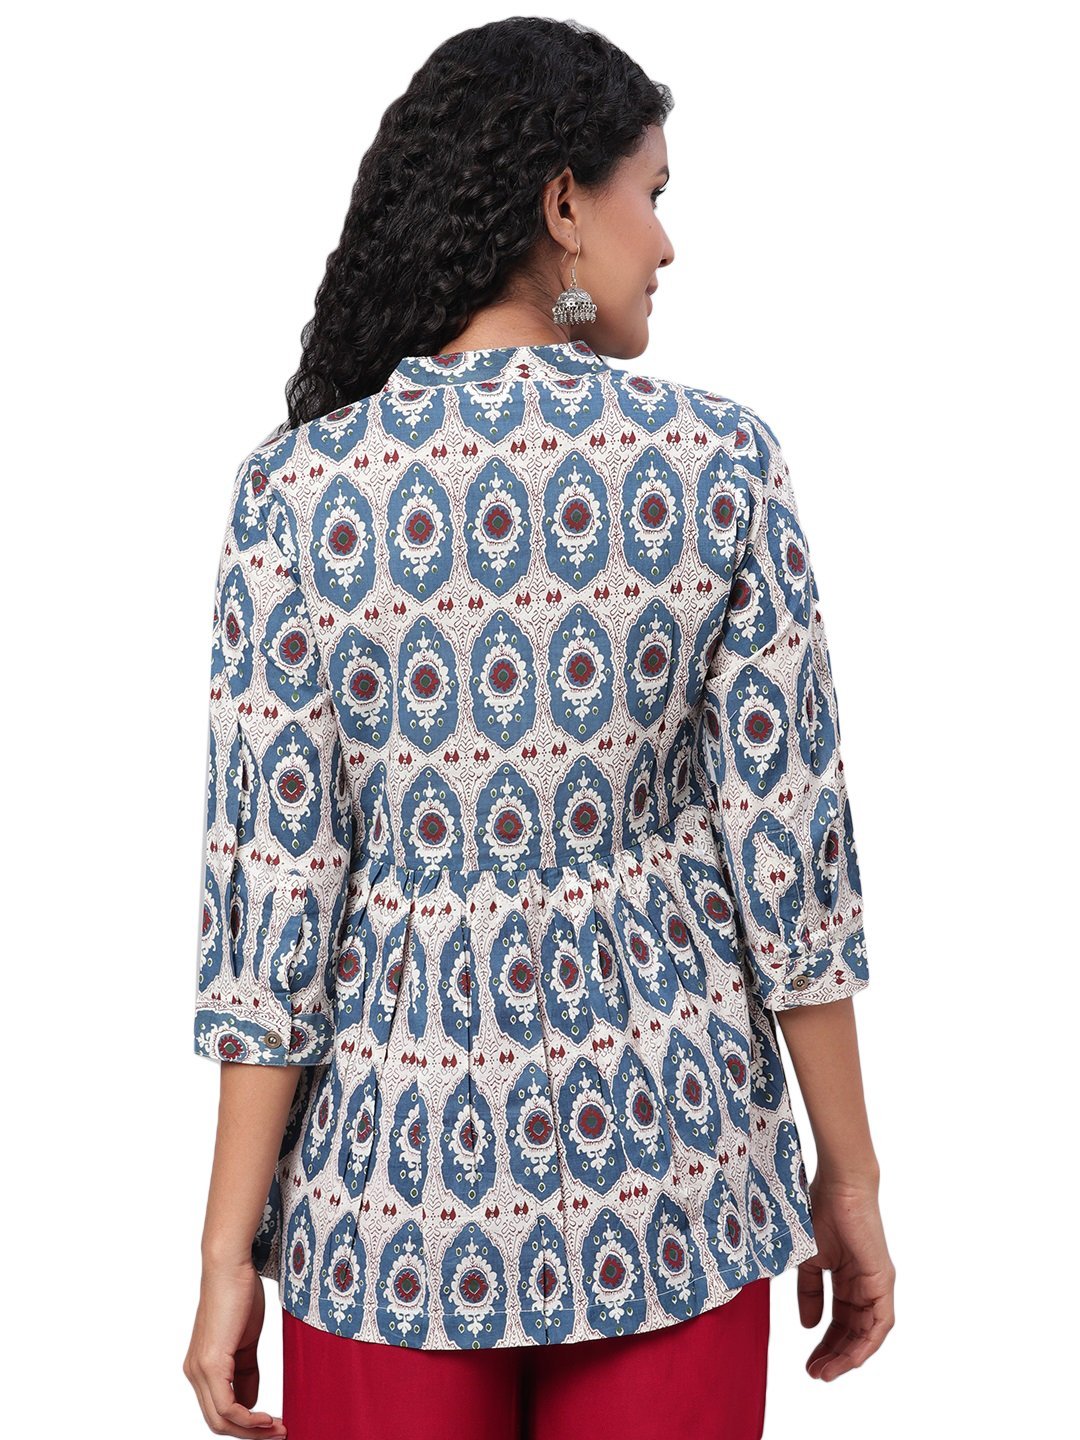 Women's Multi Printed 3/4 Sleeve Coller Neck Cotton Casual Top - Myshka